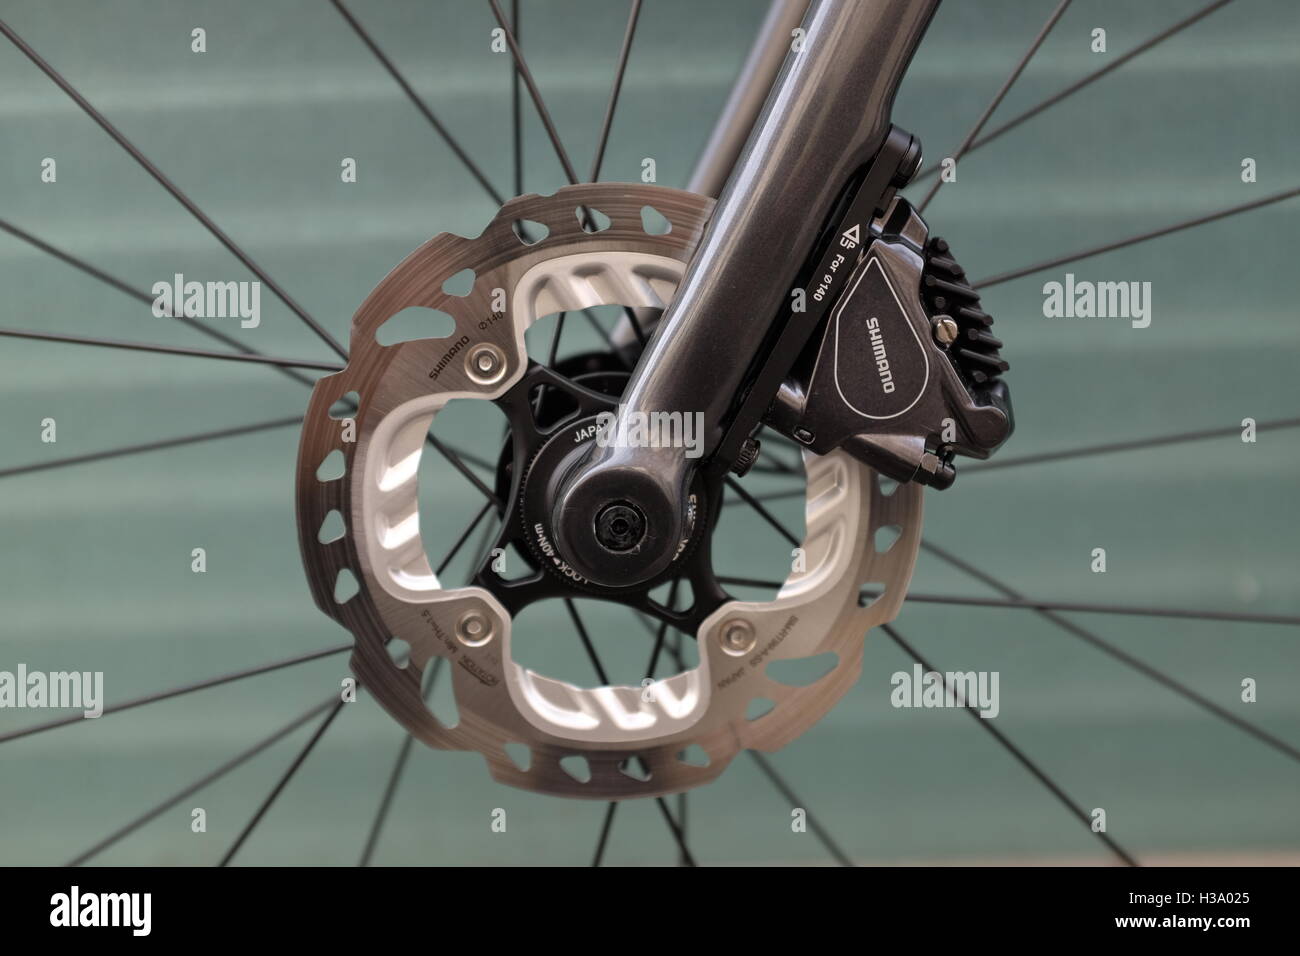 Bicycle disc brake mechanism Stock Photo